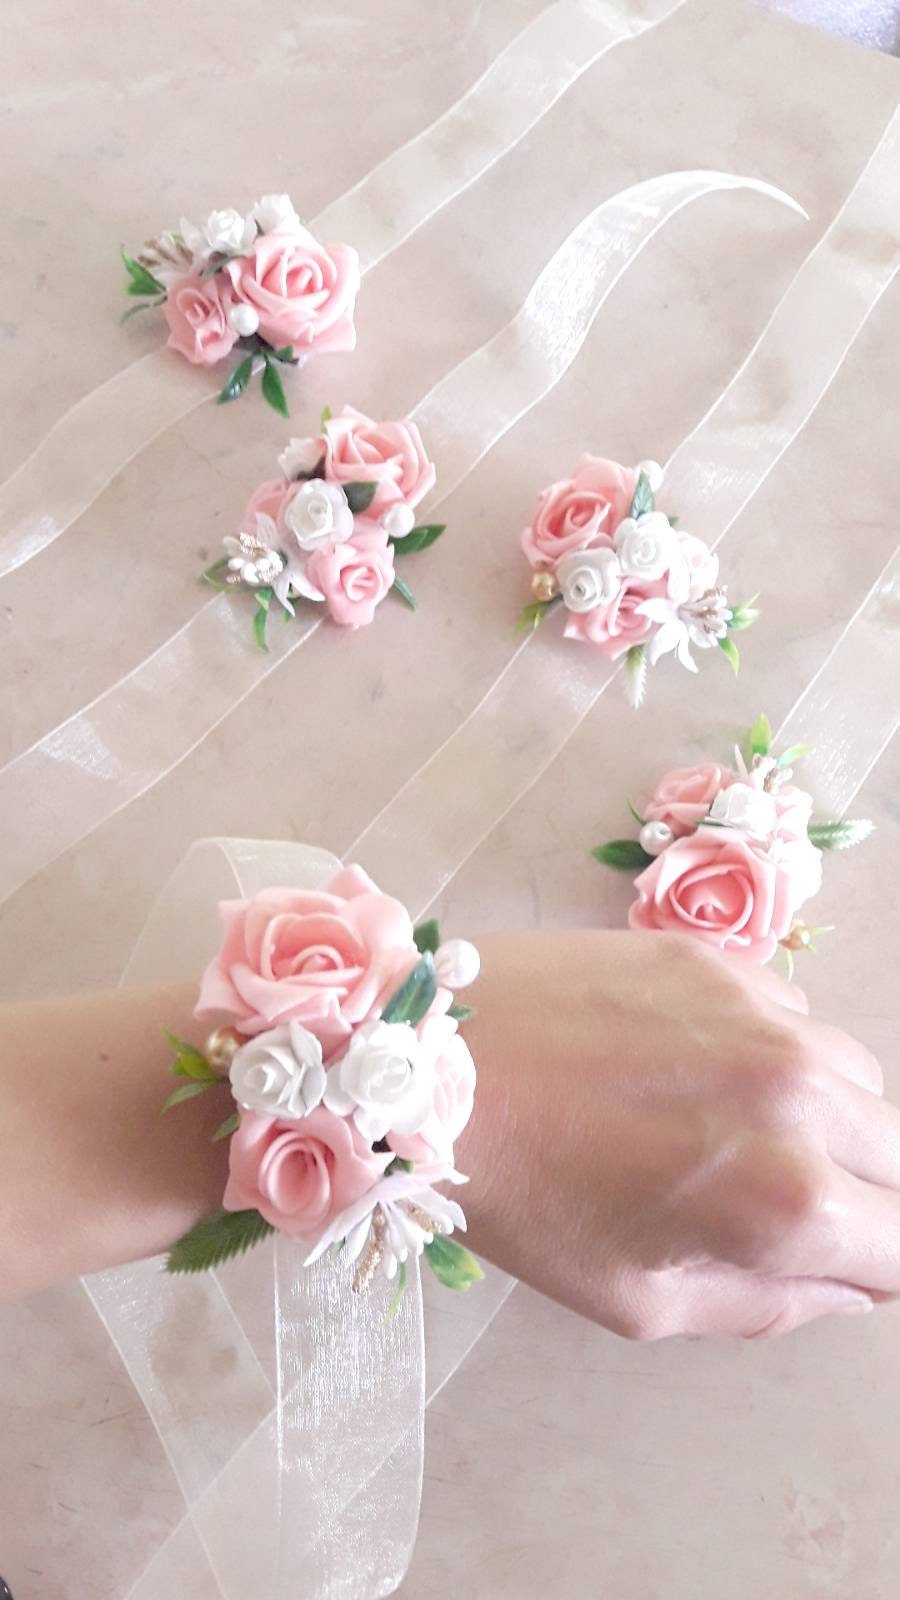 Axnhbubu 4pcs Claret Rose Wedding Girl's Wrist Corsage Bracelets,Bridesmaid Pearl Bracelet,Women's Hand Flowers for Wedding Party Prom,Homecoming